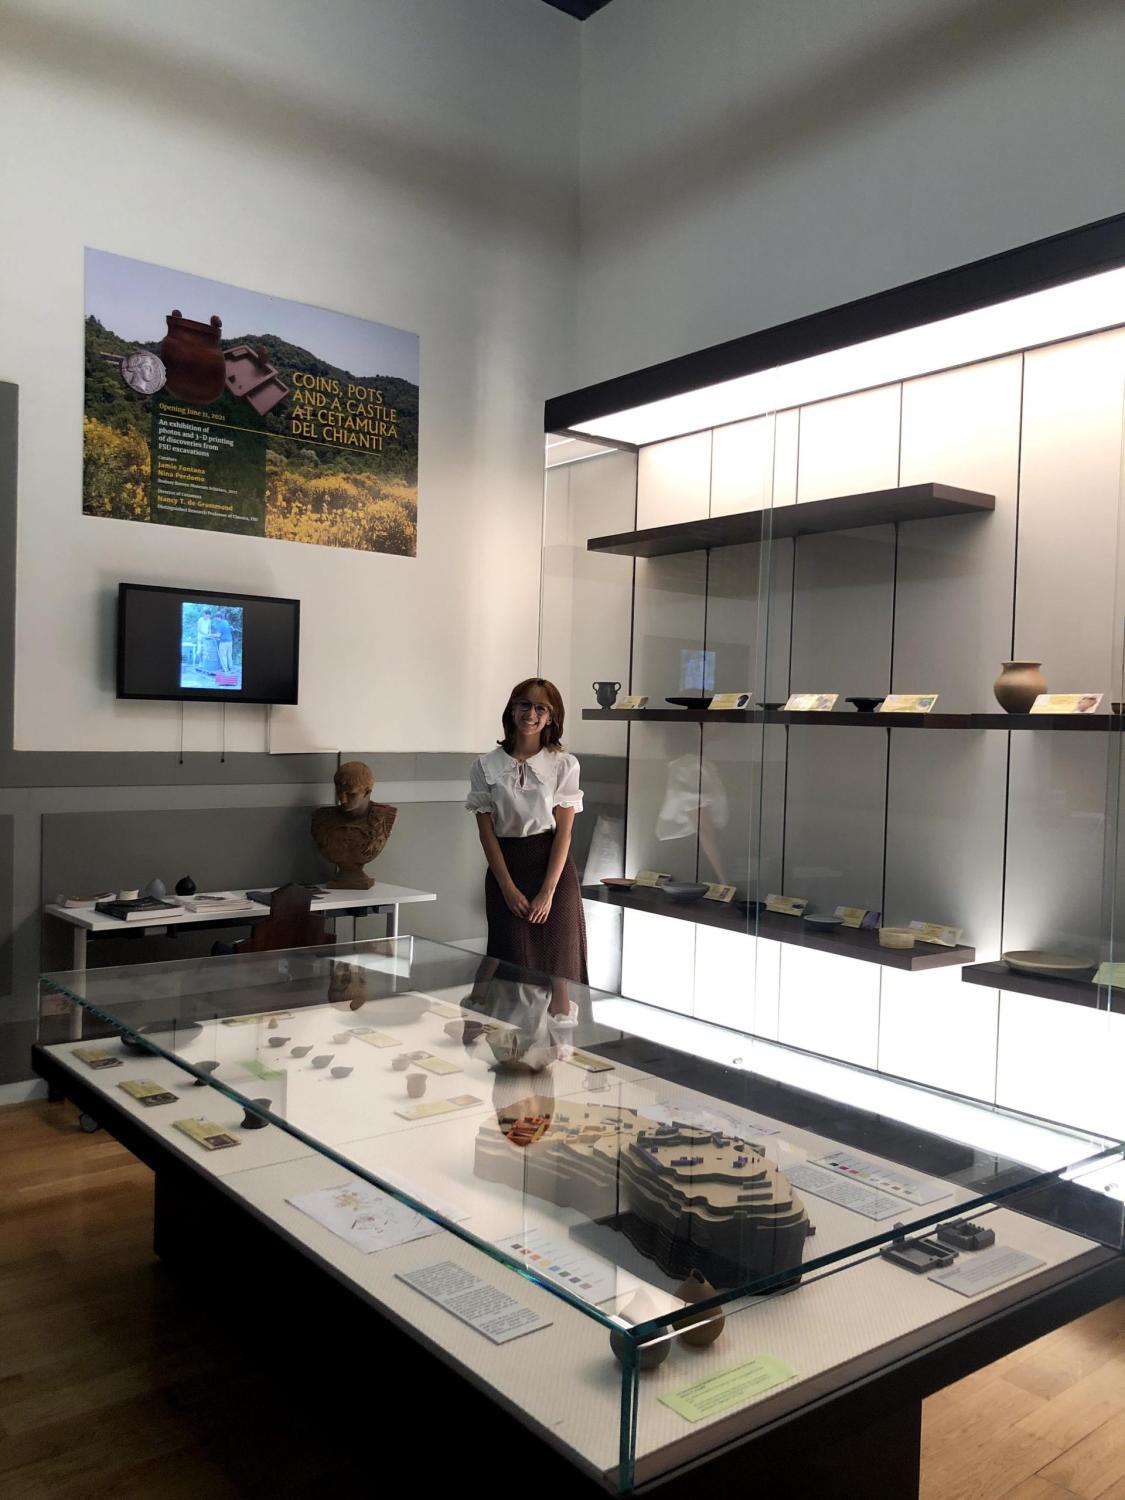 "Nina Perdomo presenting at the “Coins, Pots, and a Castle at Cetamura del Chianti" exhibition. Courtesy photo."